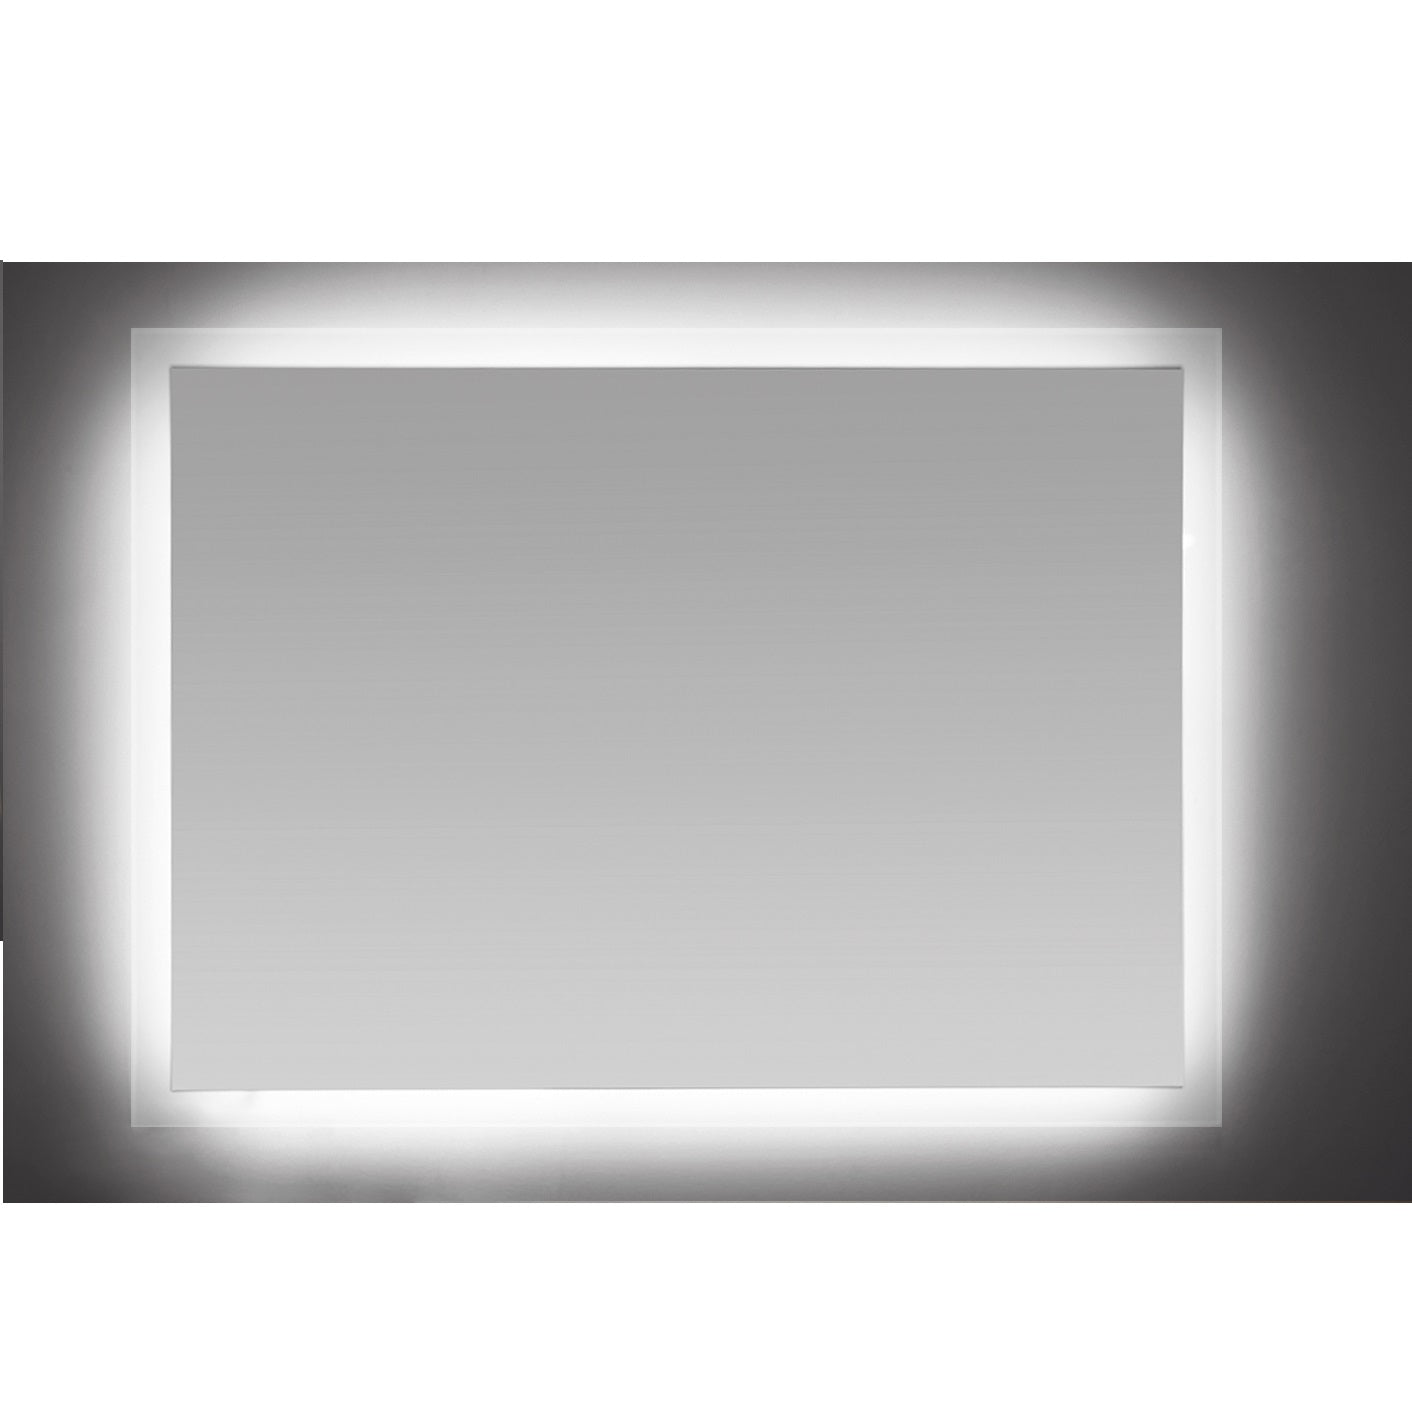 Square mirror with LED Light 1200mm * 900mm - MIRO MNLITE 127